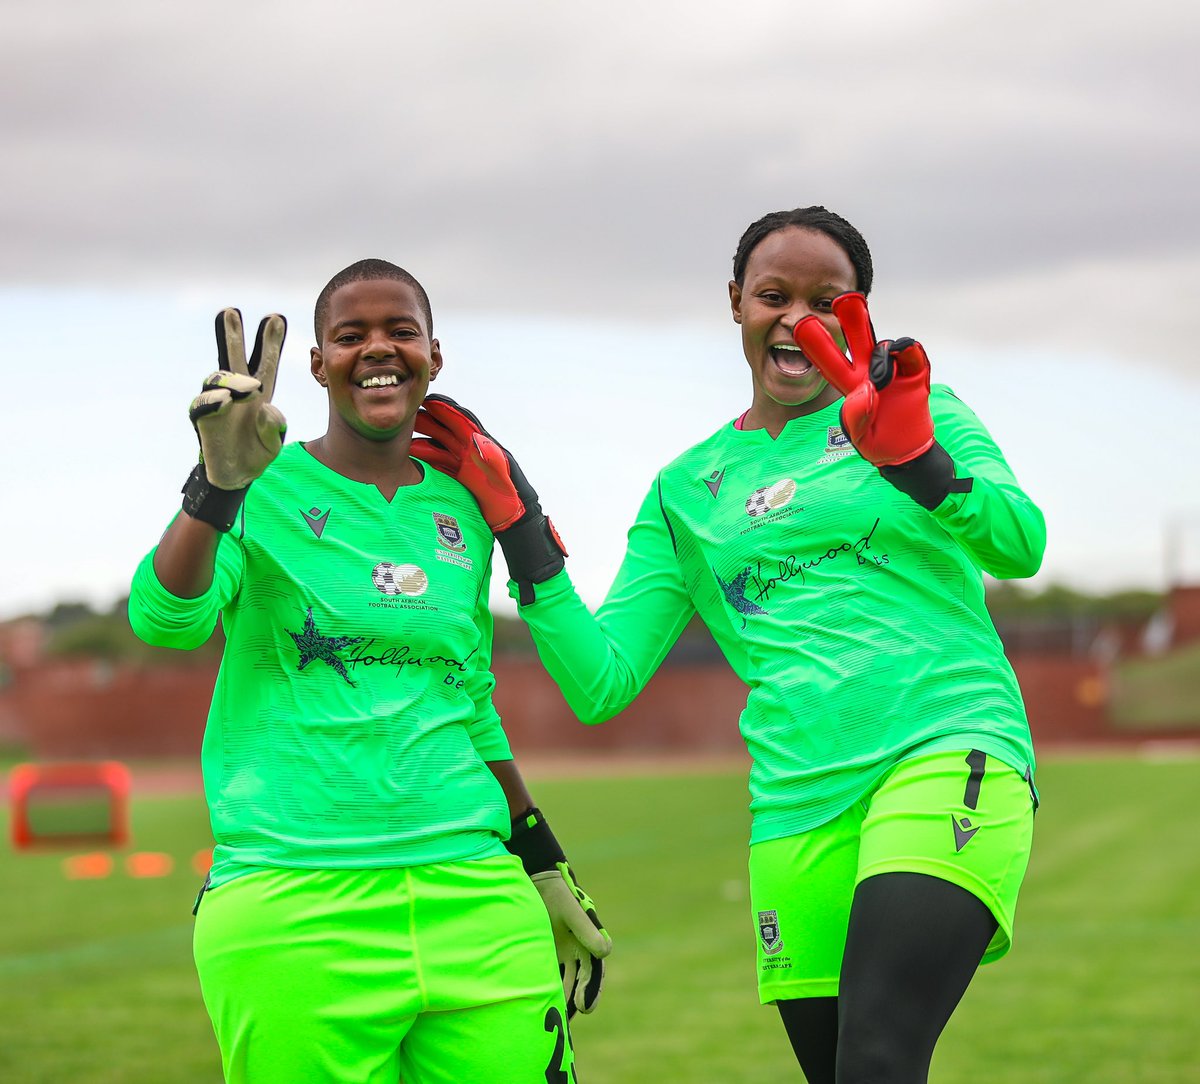 Goalkeepers appreciation post 🧤. 𝙊𝙪𝙧 #𝙒𝙤𝙢𝙚𝙣𝘾𝙧𝙪𝙨𝙝 𝙒𝙚𝙙𝙣𝙚𝙨𝙙𝙖𝙮! 😍 #UWCWomensFootball